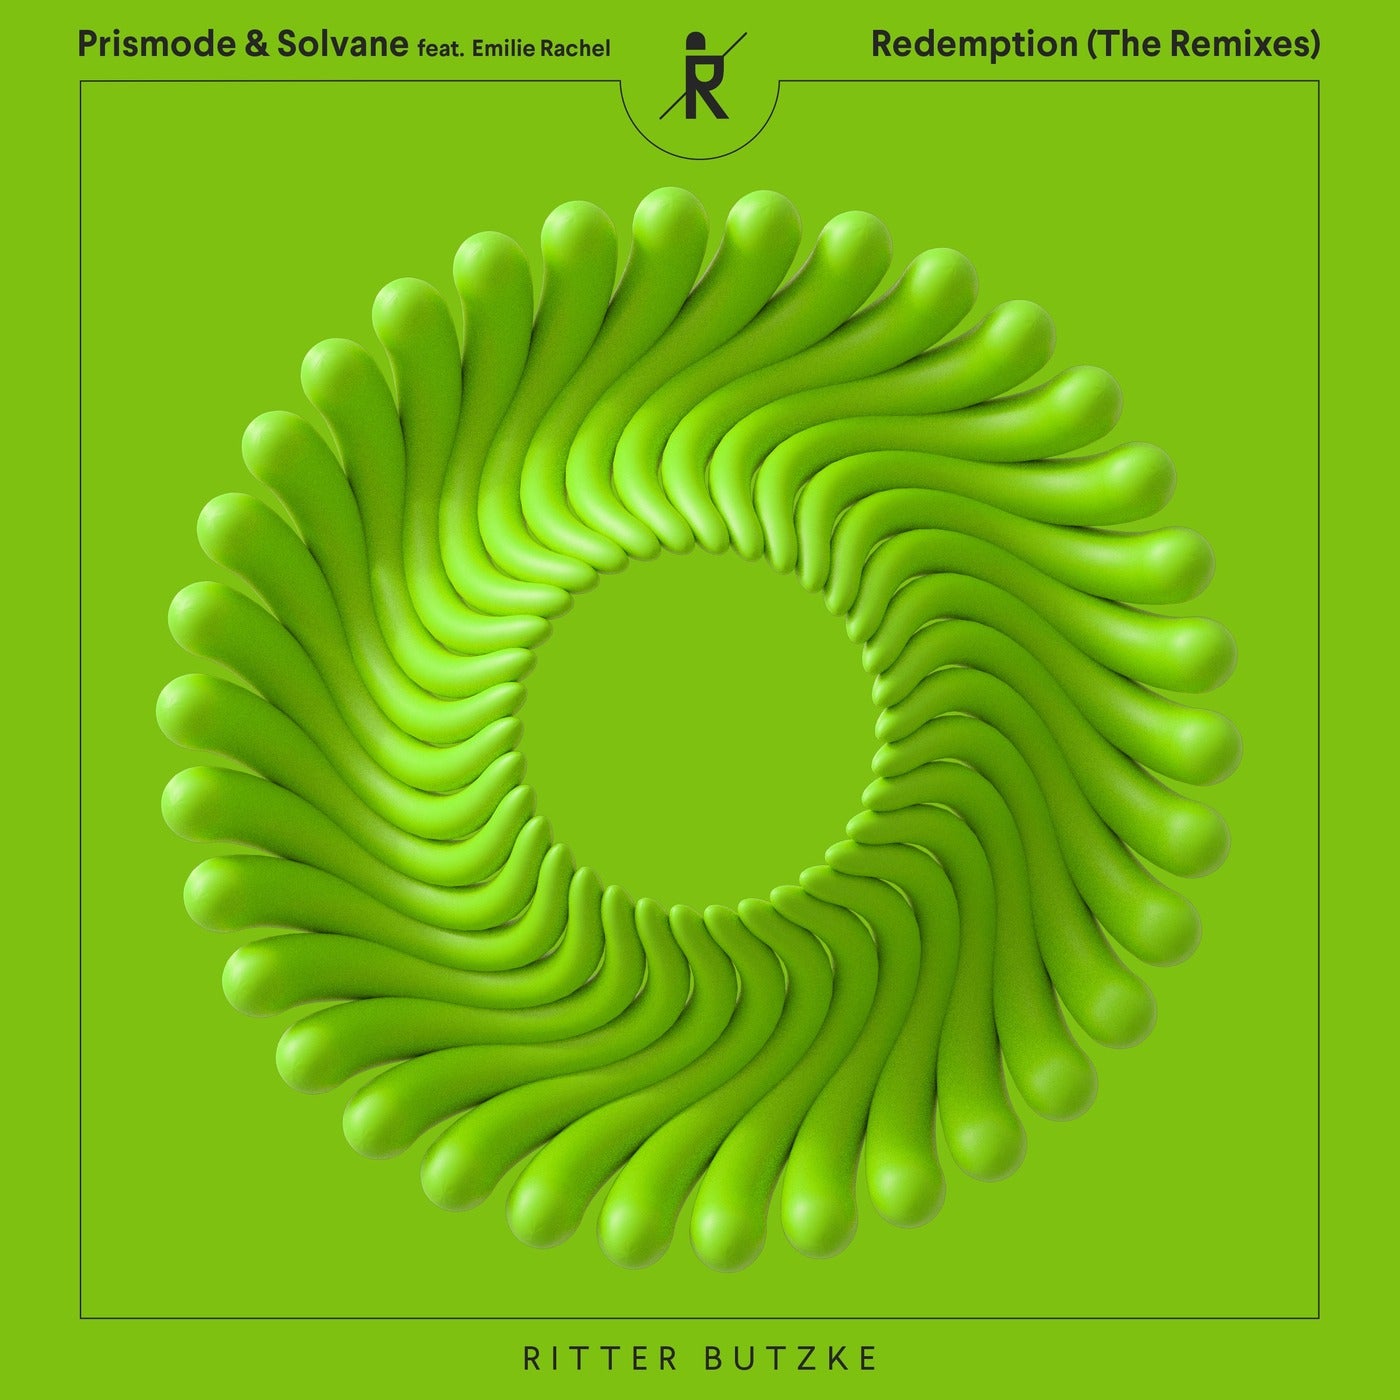 image cover: Solvane, Prismode & Émilie Rachel - Redemption (The Remixes) [RBR263] on Ritter Butzke Records